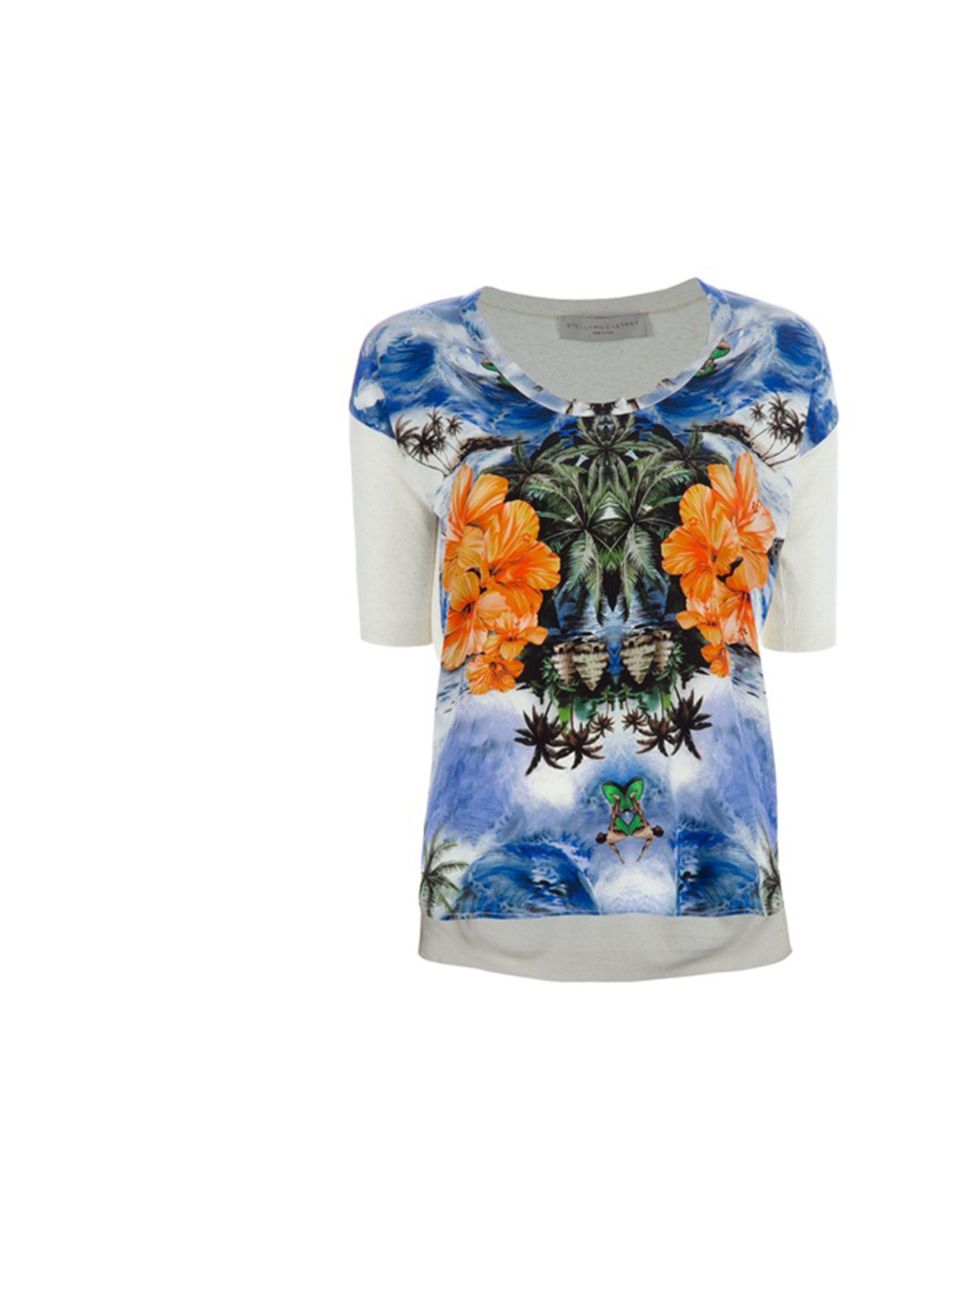 <p>Stella McCartney tropical print T-shirt, £419, at Farfetch</p><p><a href="http://shopping.elleuk.com/browse?fts=stella+mccartney+tropical+top">BUY NOW</a></p>